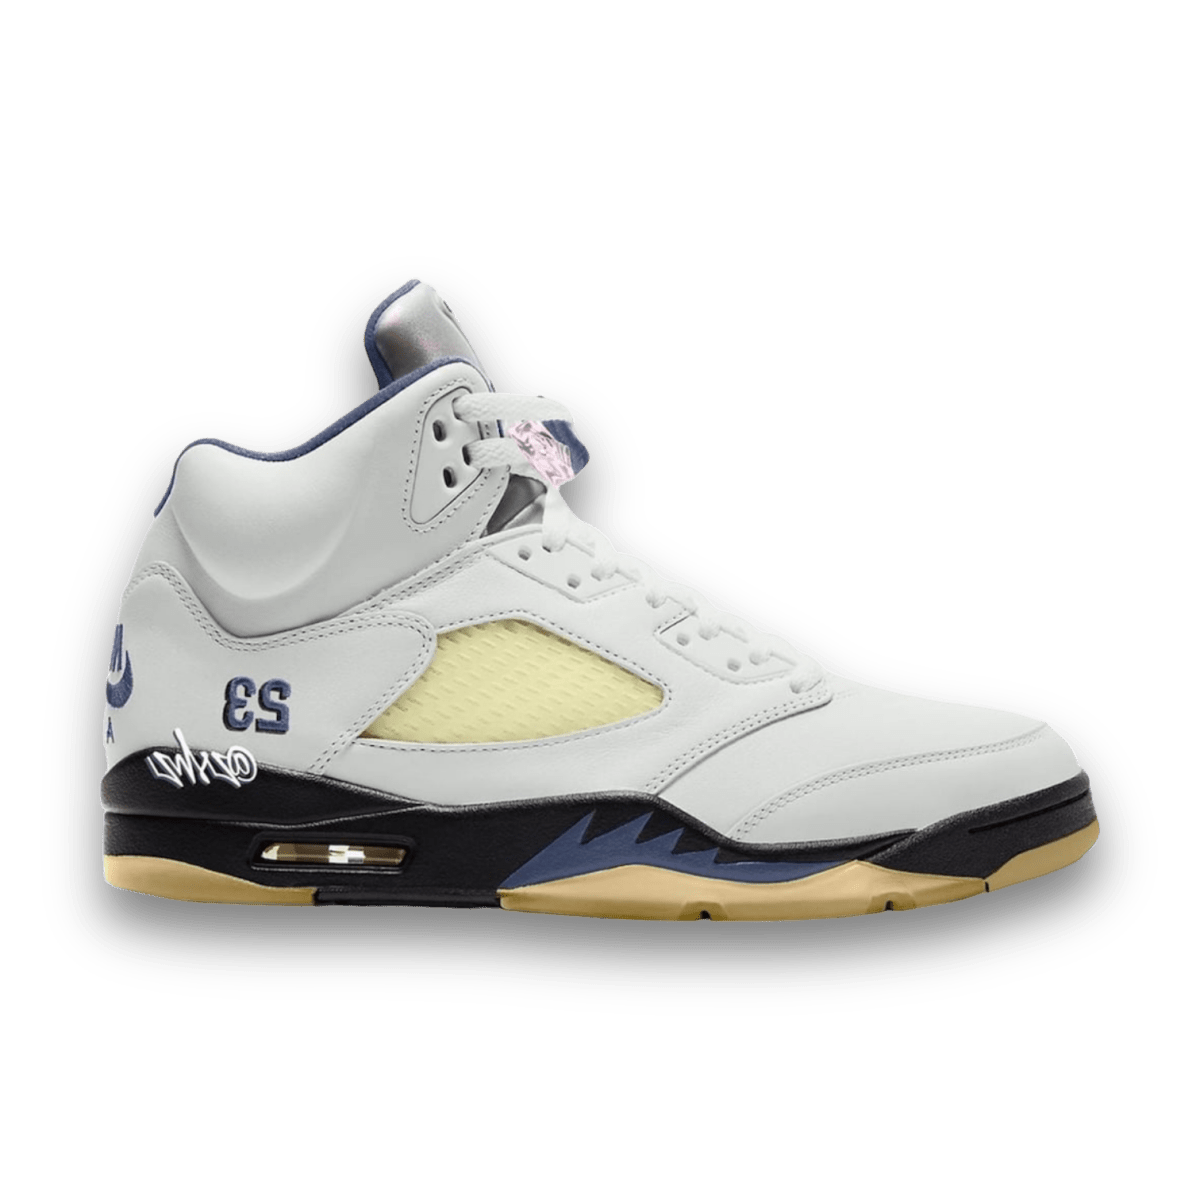 A Ma Maniére x Air Jordan 5 Retro 'Photon Dust' - Mid Sneaker - Jawns on Fire Sneakers & Streetwear